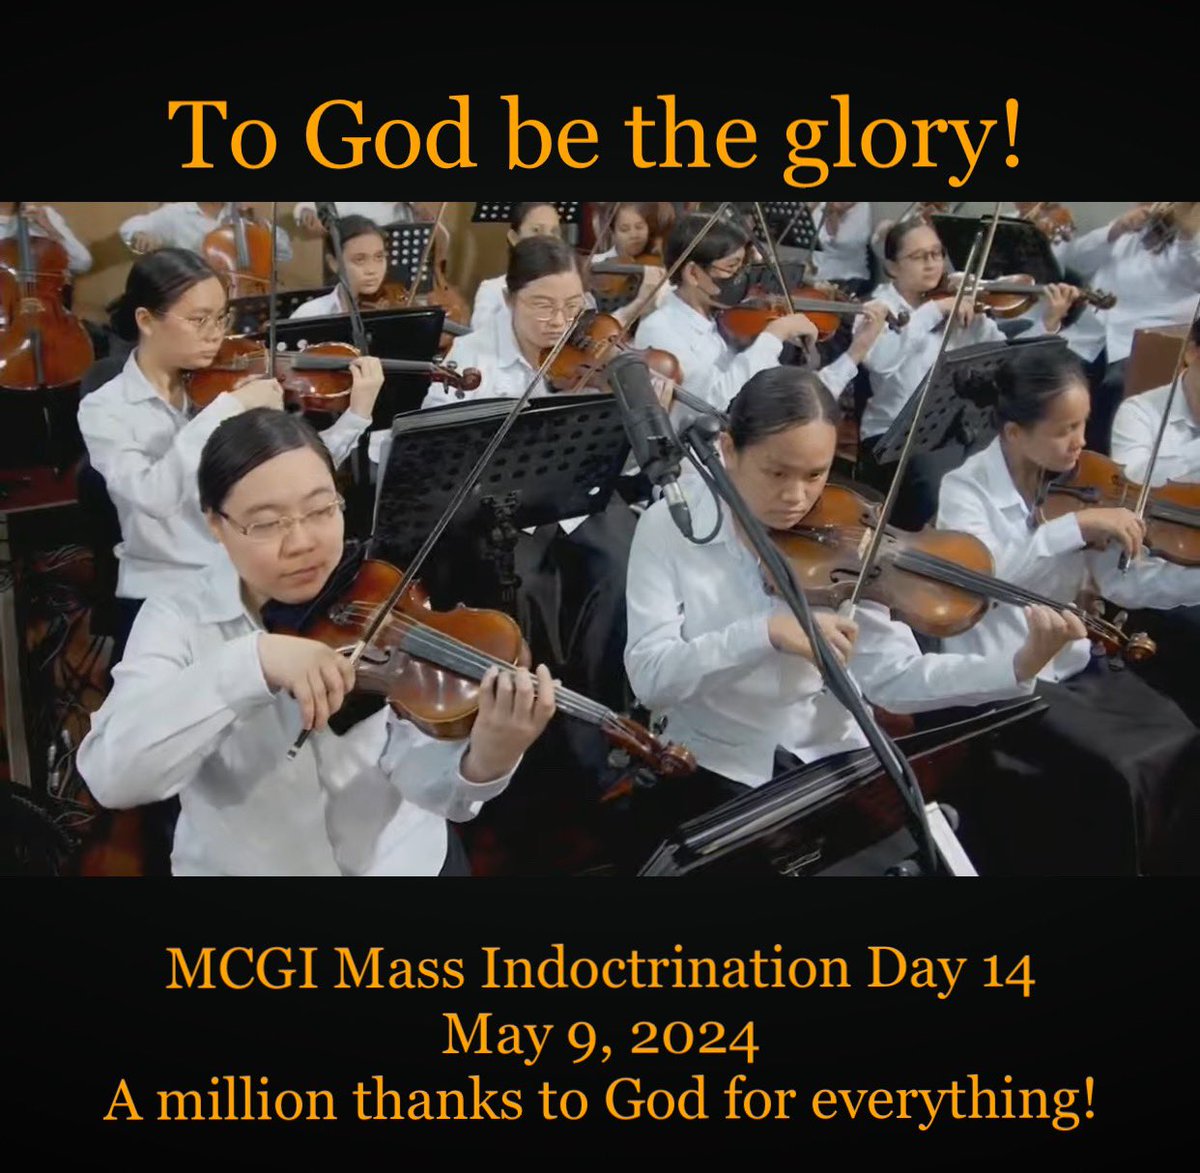 Welcome to the 
MCGI Mass Indoctrination Day 14
May 9, 2024

True Baptism
#PureDoctrinesOfChrist 
#GlobalPrayerForHumanity